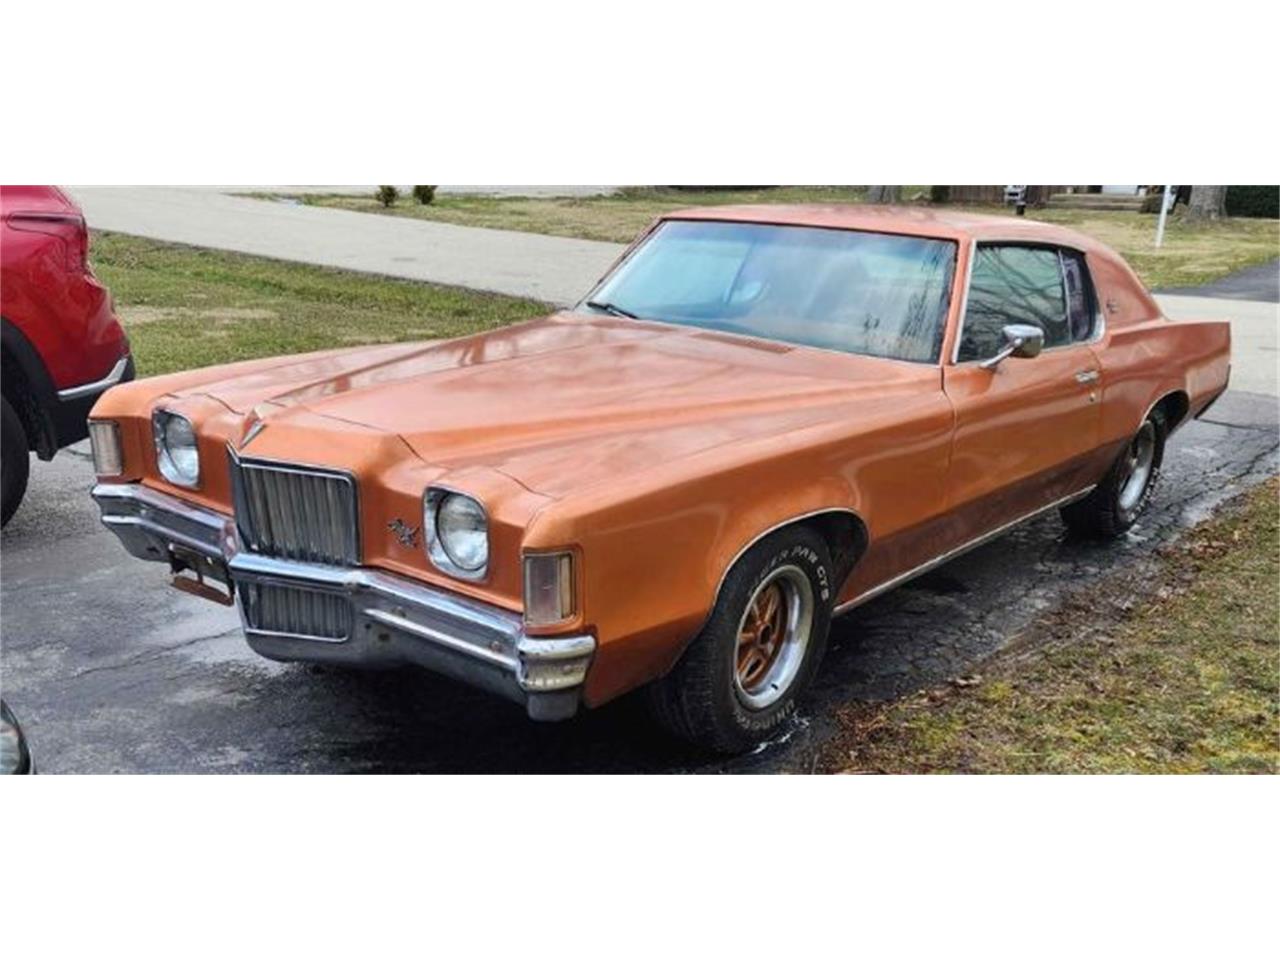 For Sale: 1971 Pontiac Grand Prix in Cadillac, Michigan for sale in Cadillac, MI